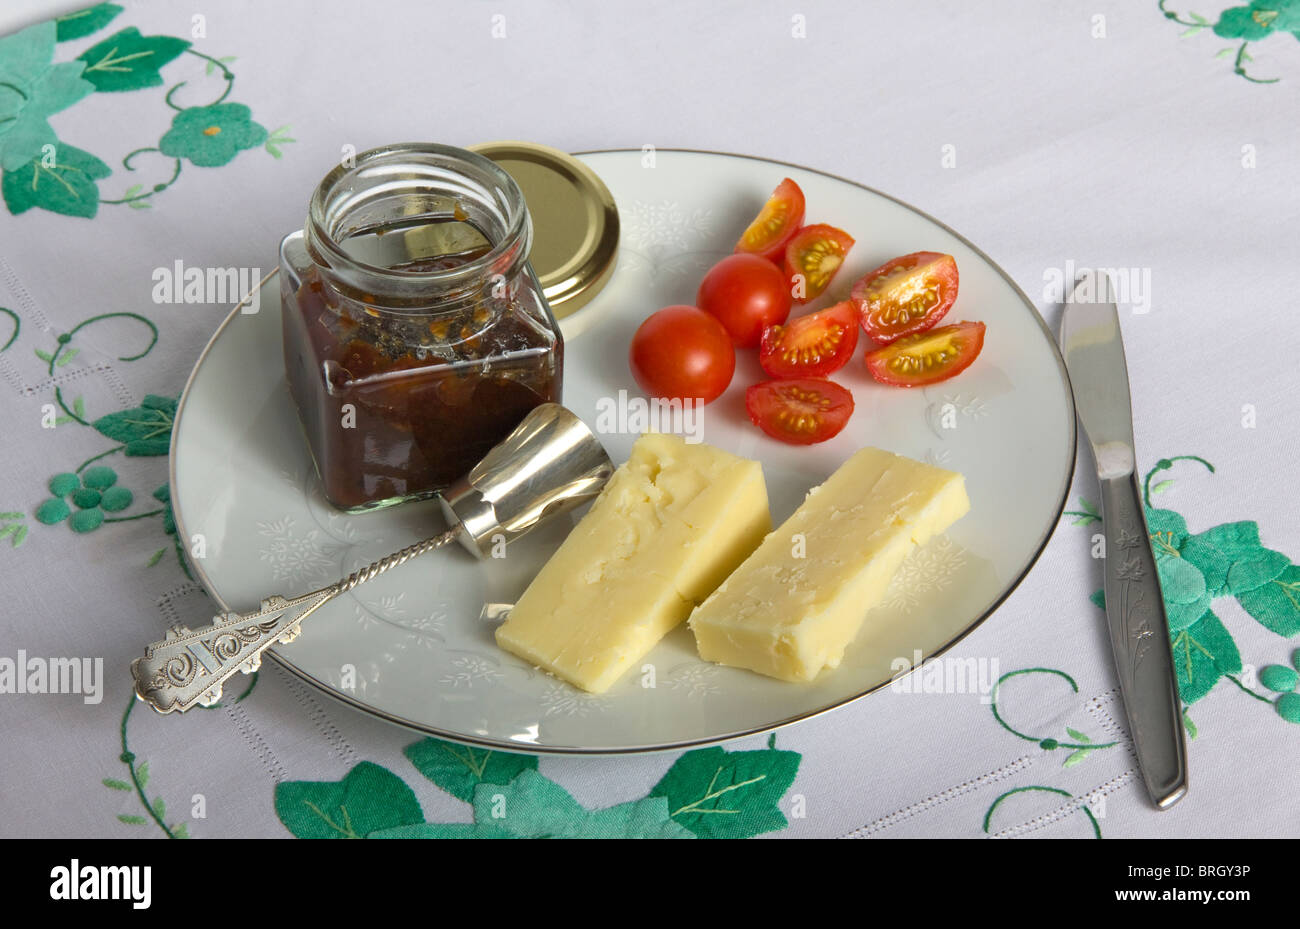 Cheese and chutney snack Stock Photo